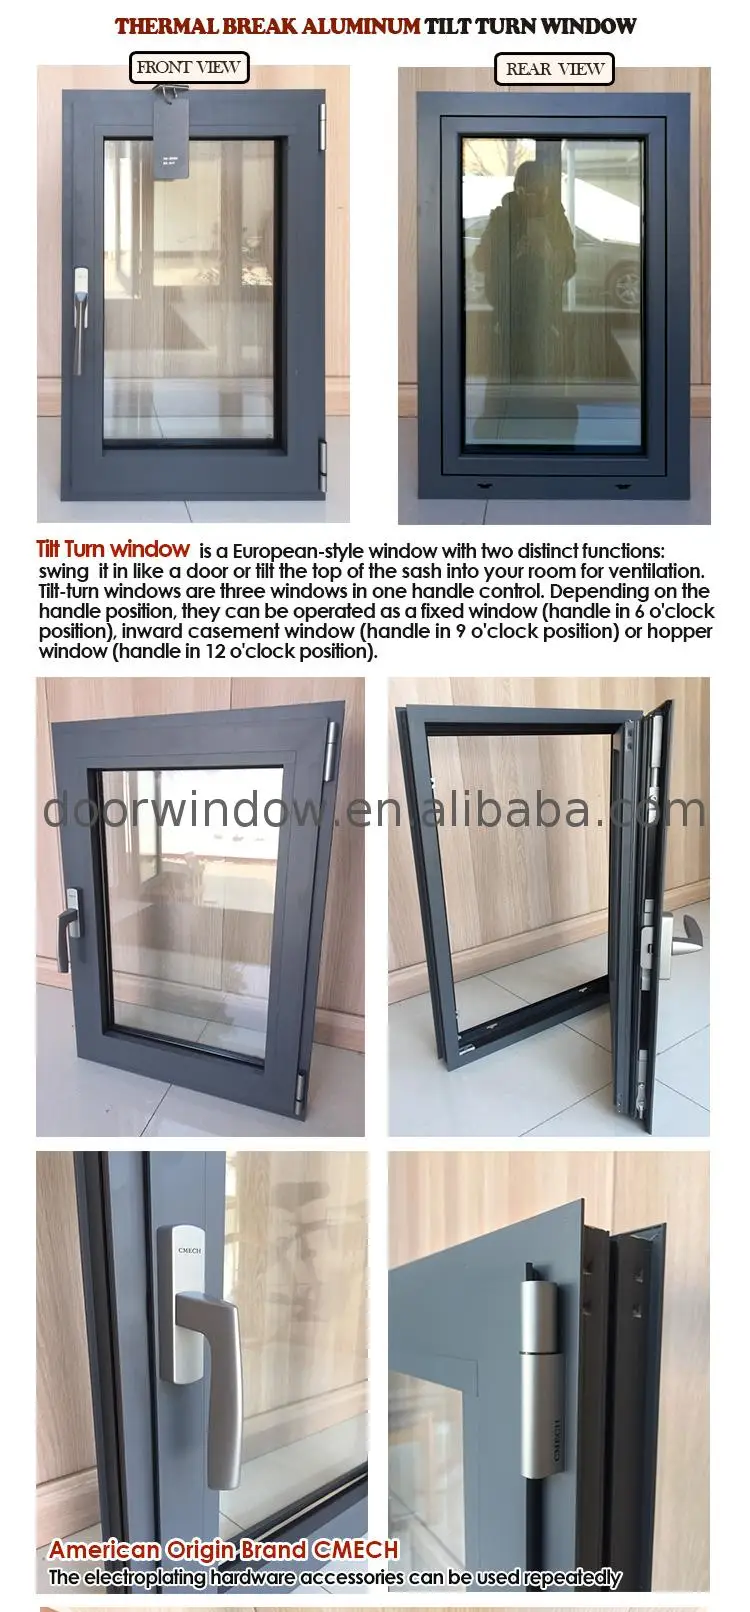 American standard aluminium alloy casement windows and doors hardware tilt turn window accessories